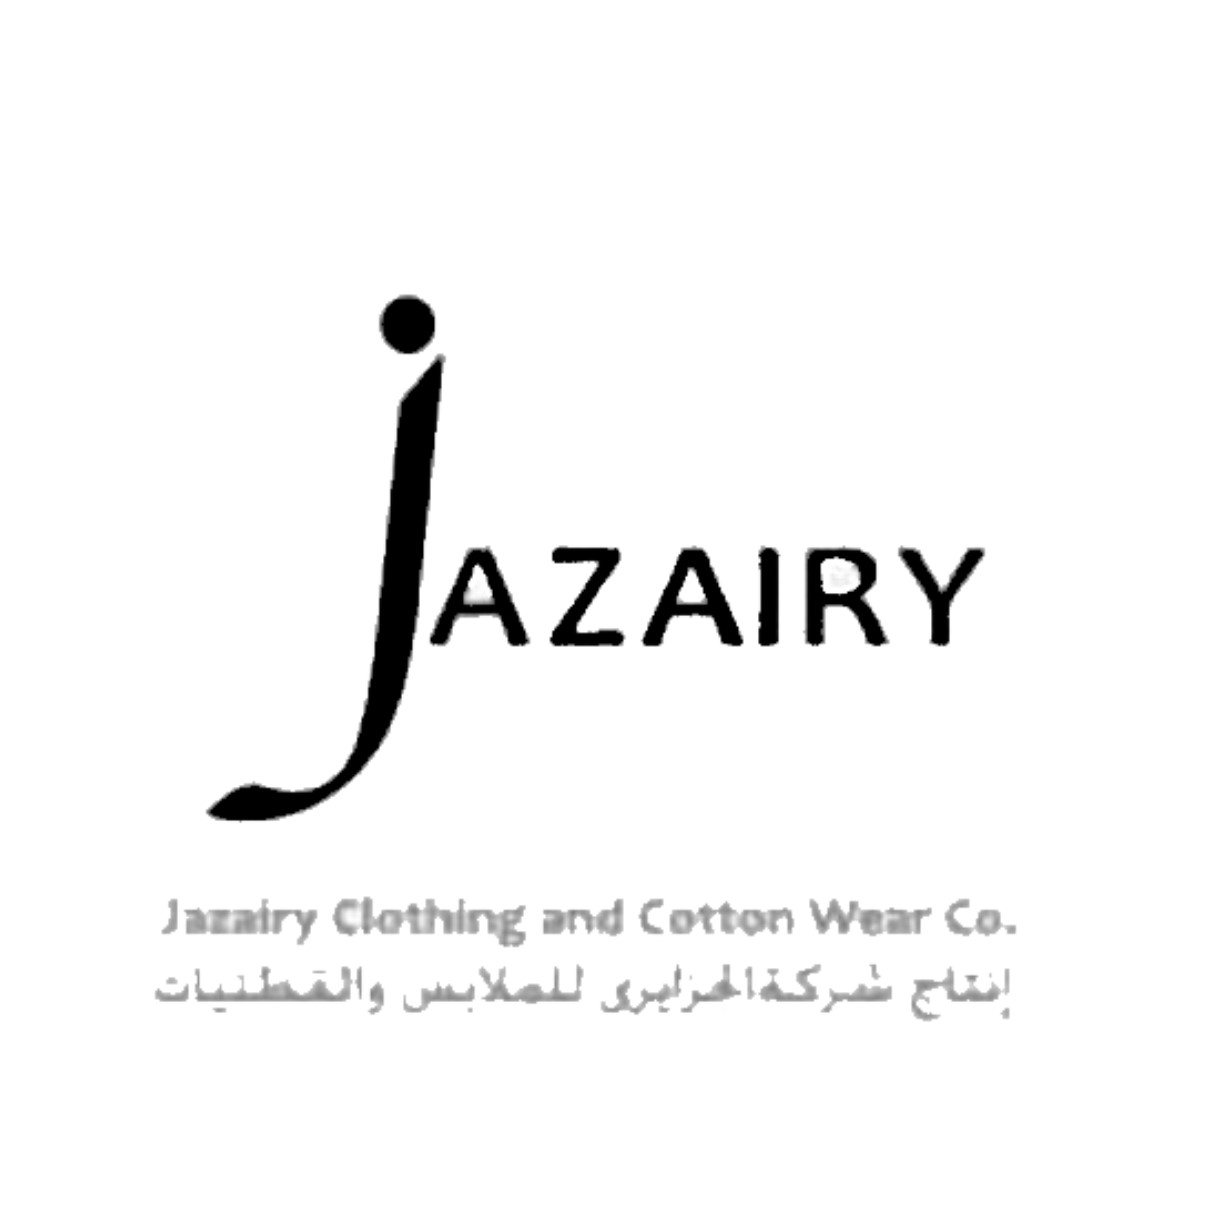 Jazairy Cotton Wear